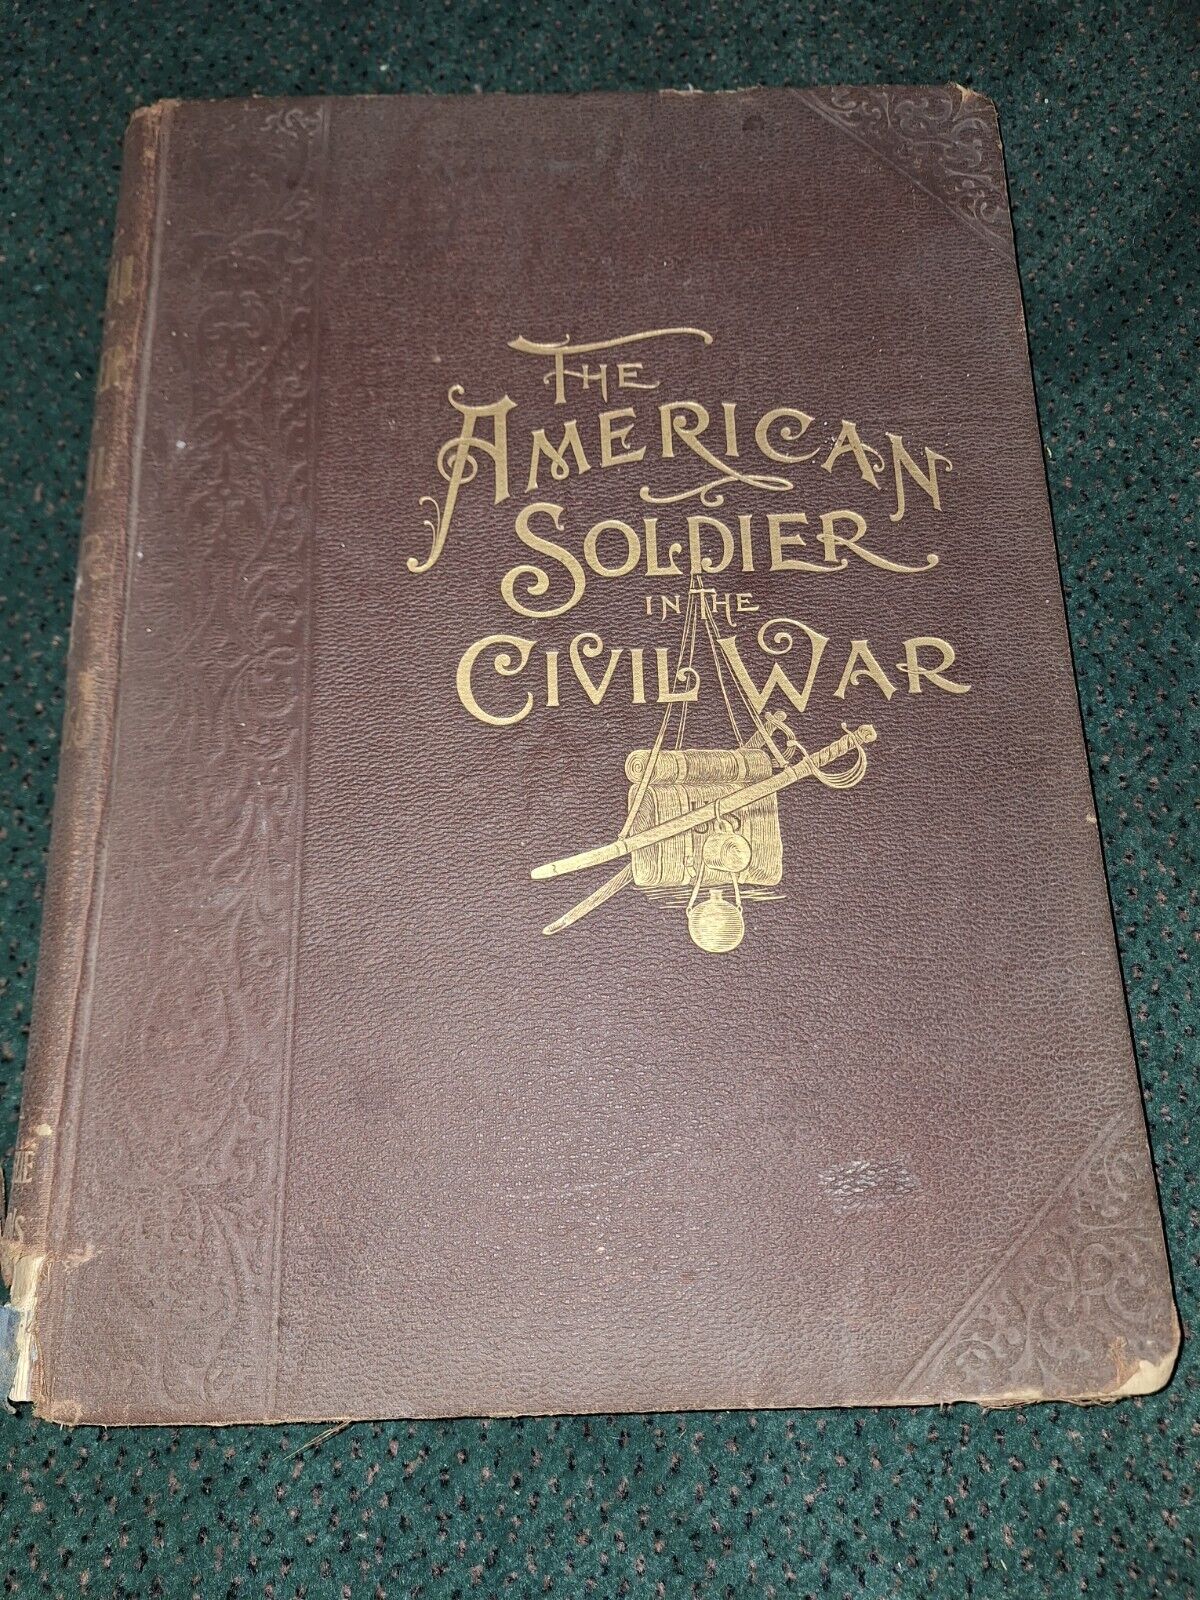 Frank Leslie's American Soldier in the Civil War.(Frank Leslie). 1895